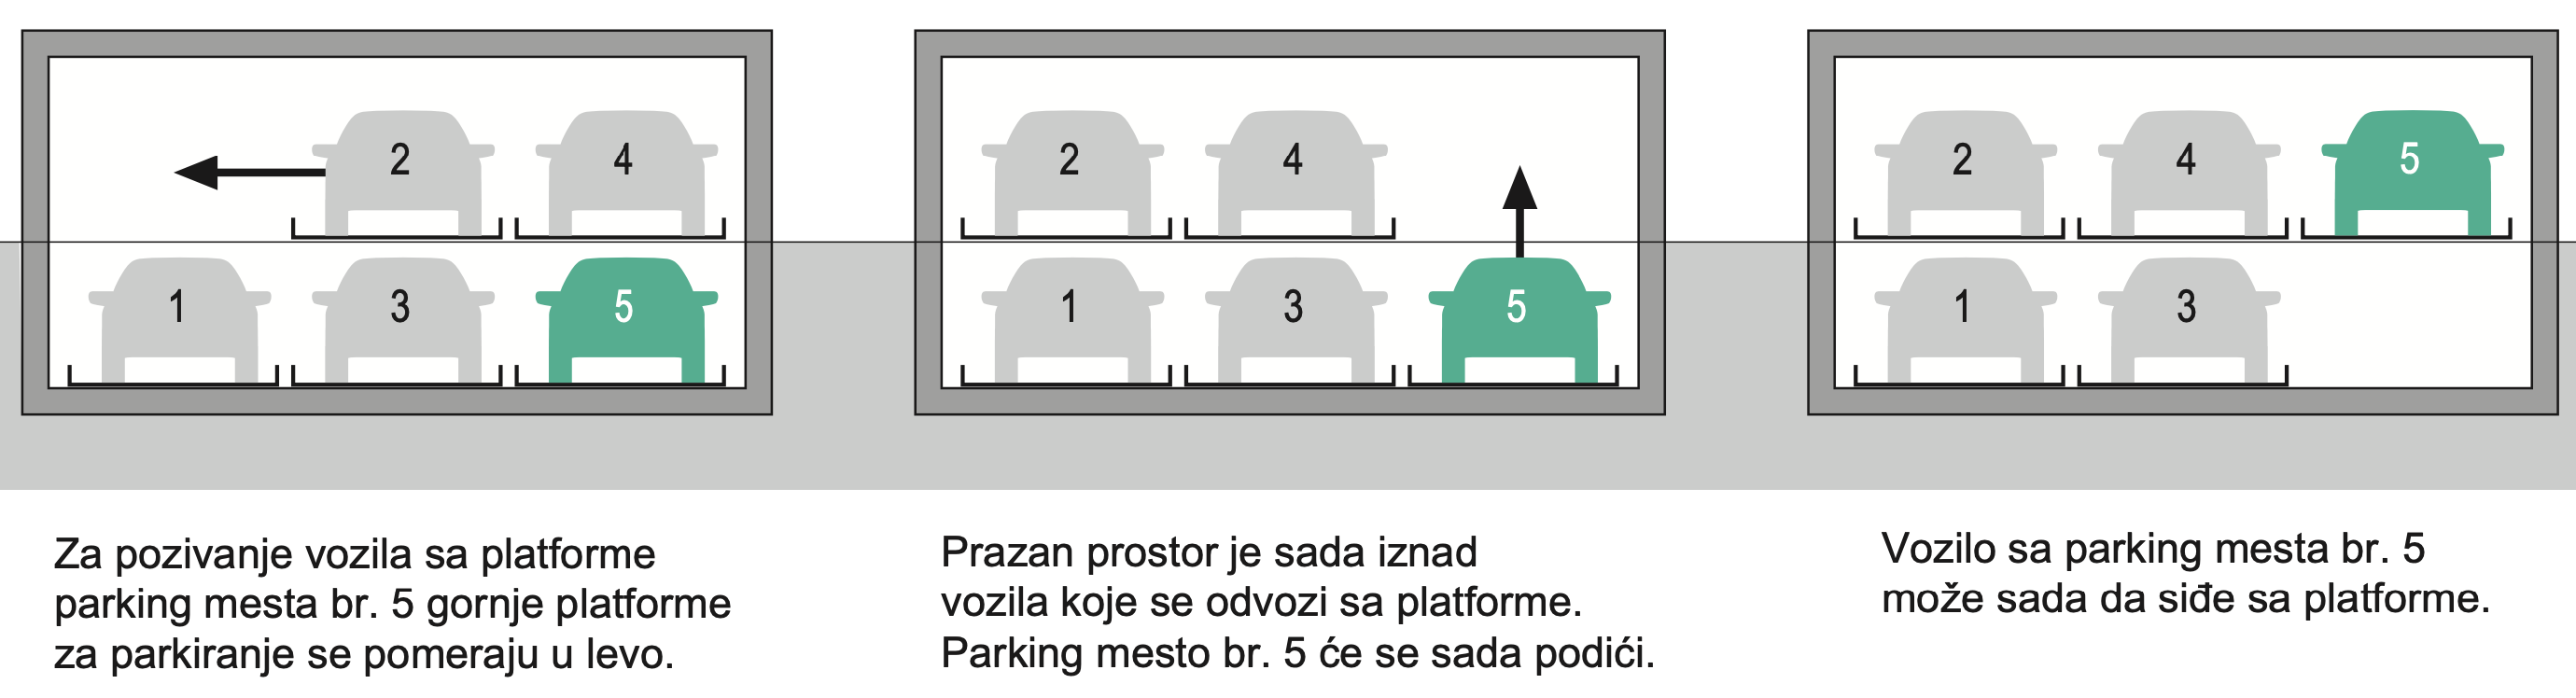 Podzemni puzzle parking sistem - primer funkcionisanja